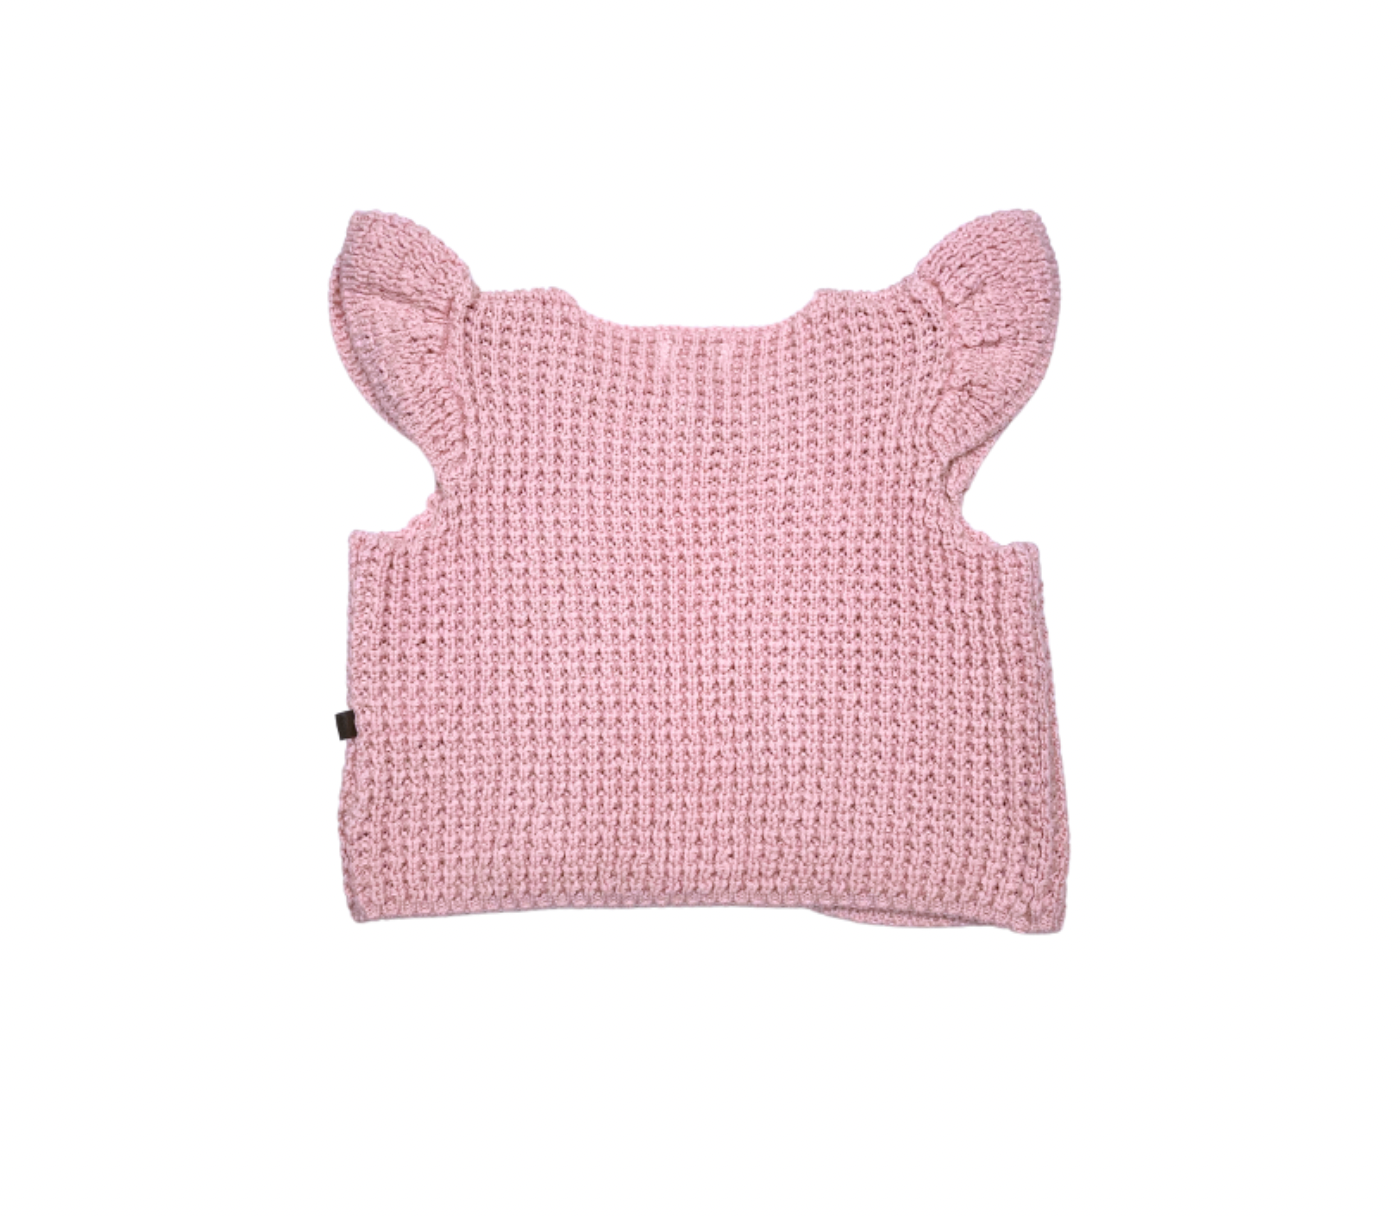 OEUF NYC - Veste en crochet rose - 18 mois